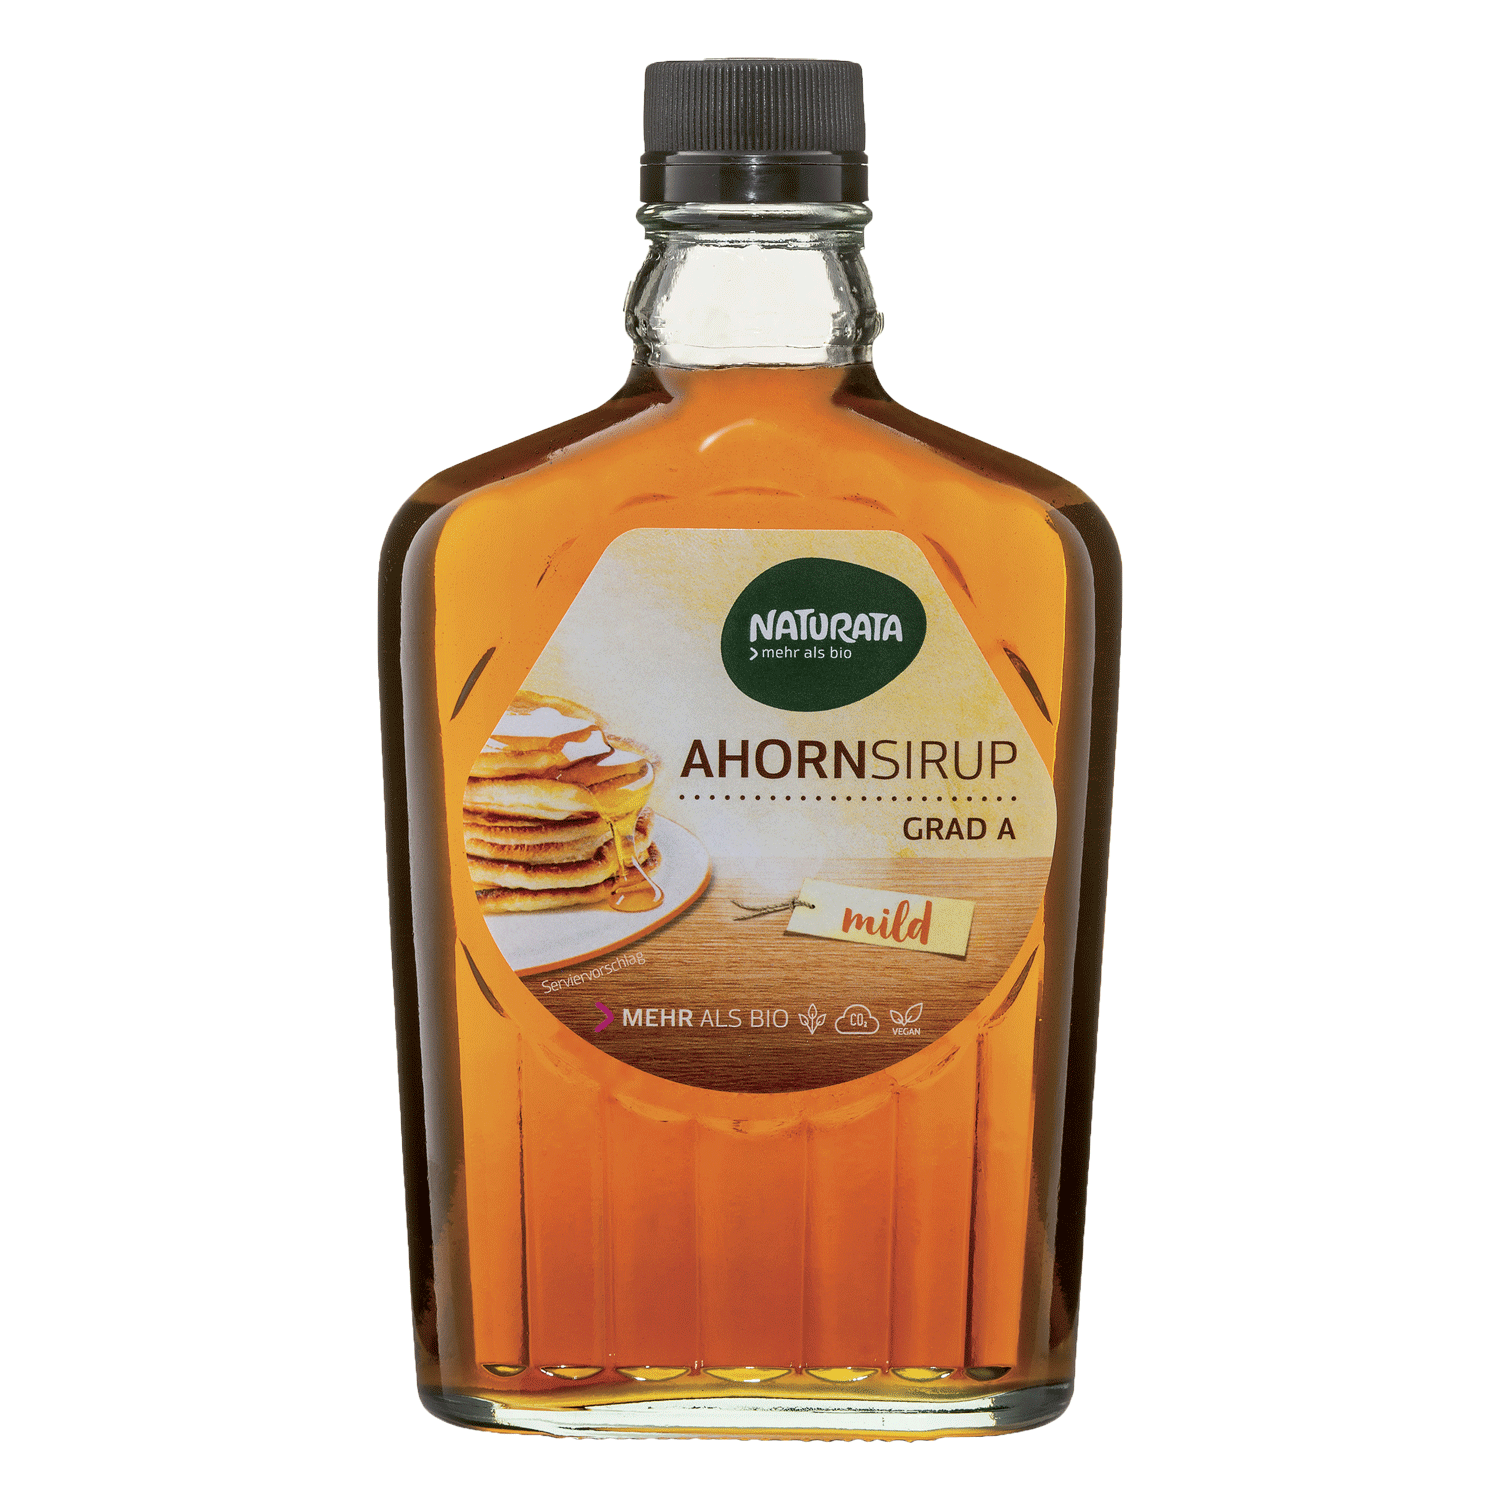 Ahornsirup Grad A, mild, 250 ml